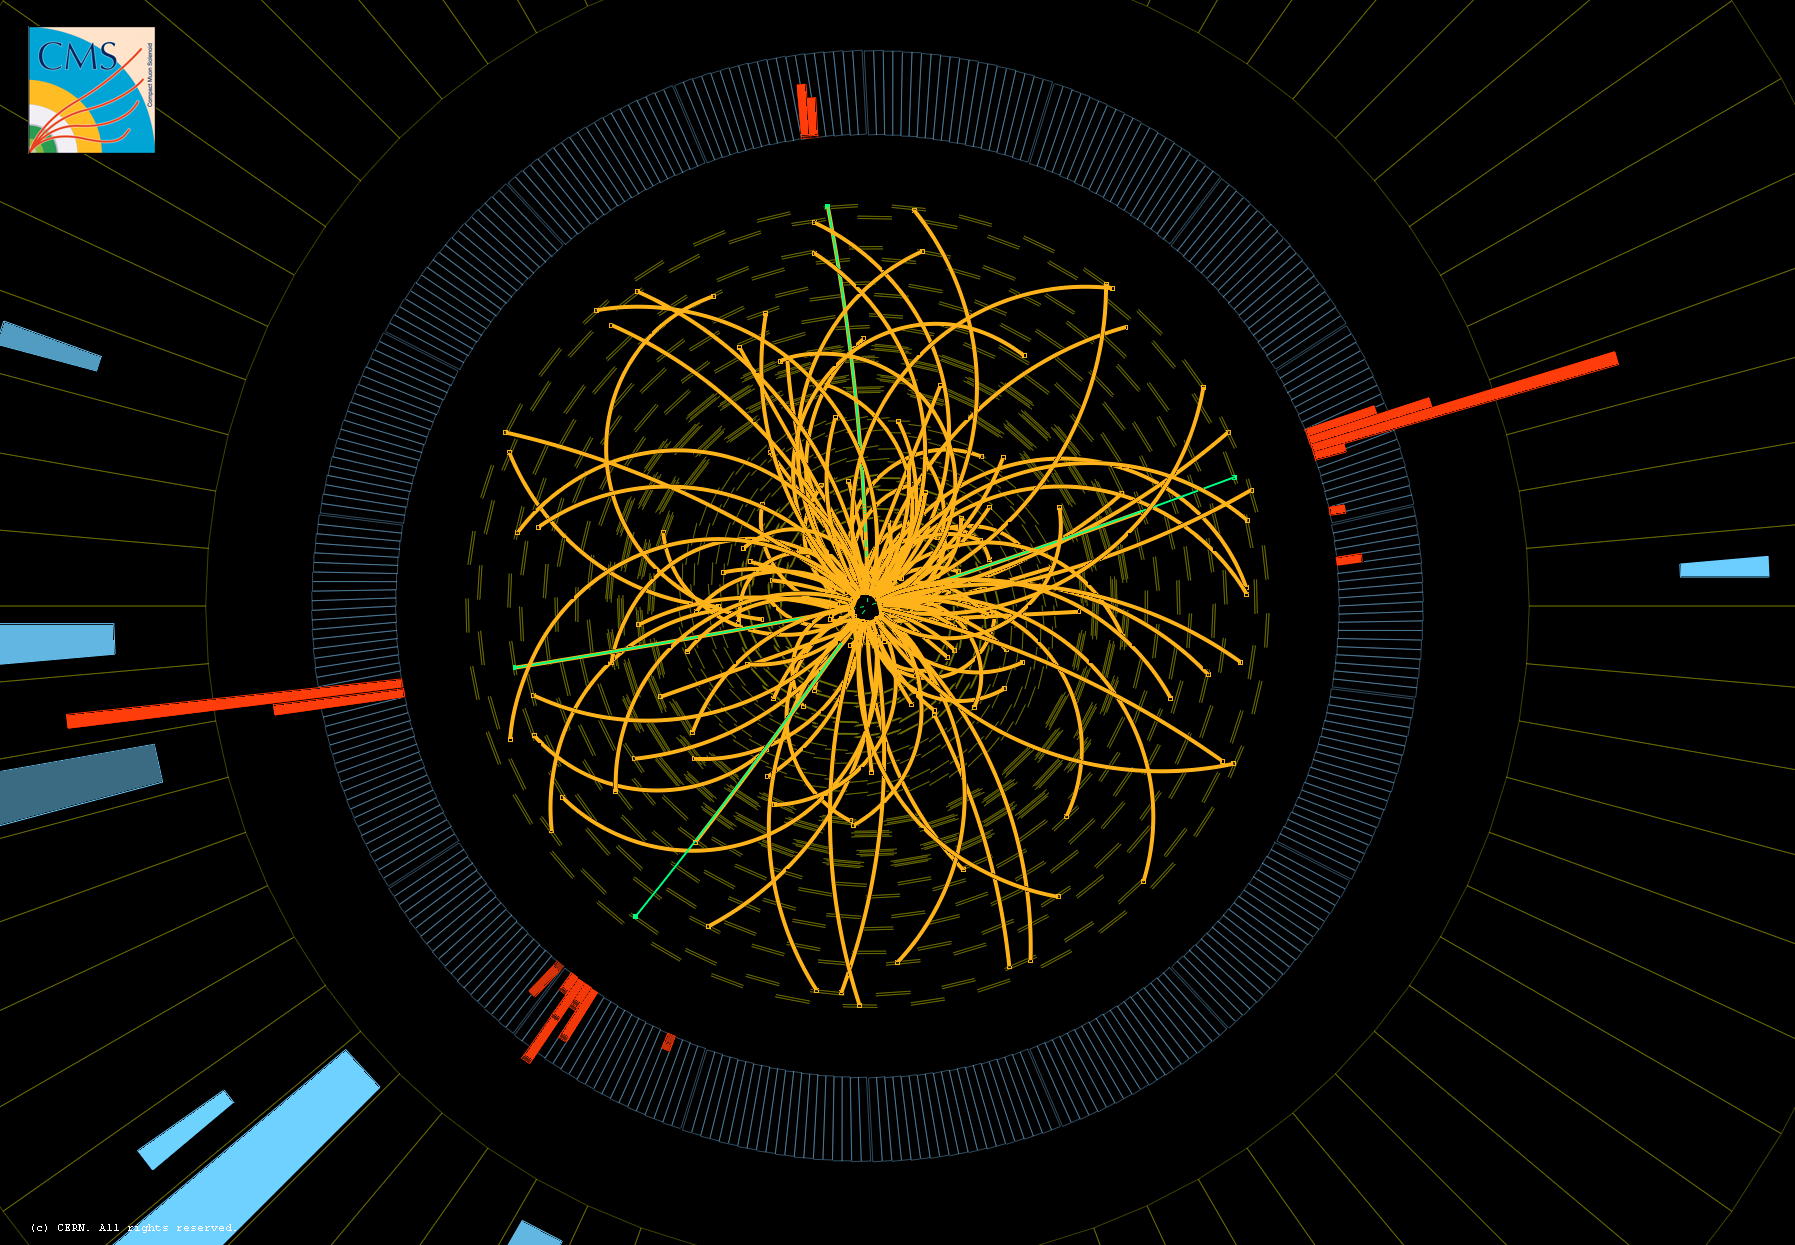 2.4 Das Elektrische Feld Abb. 2.5 Proton-Proton-Kollision im CMS Experiment am Large Hadron Collider.